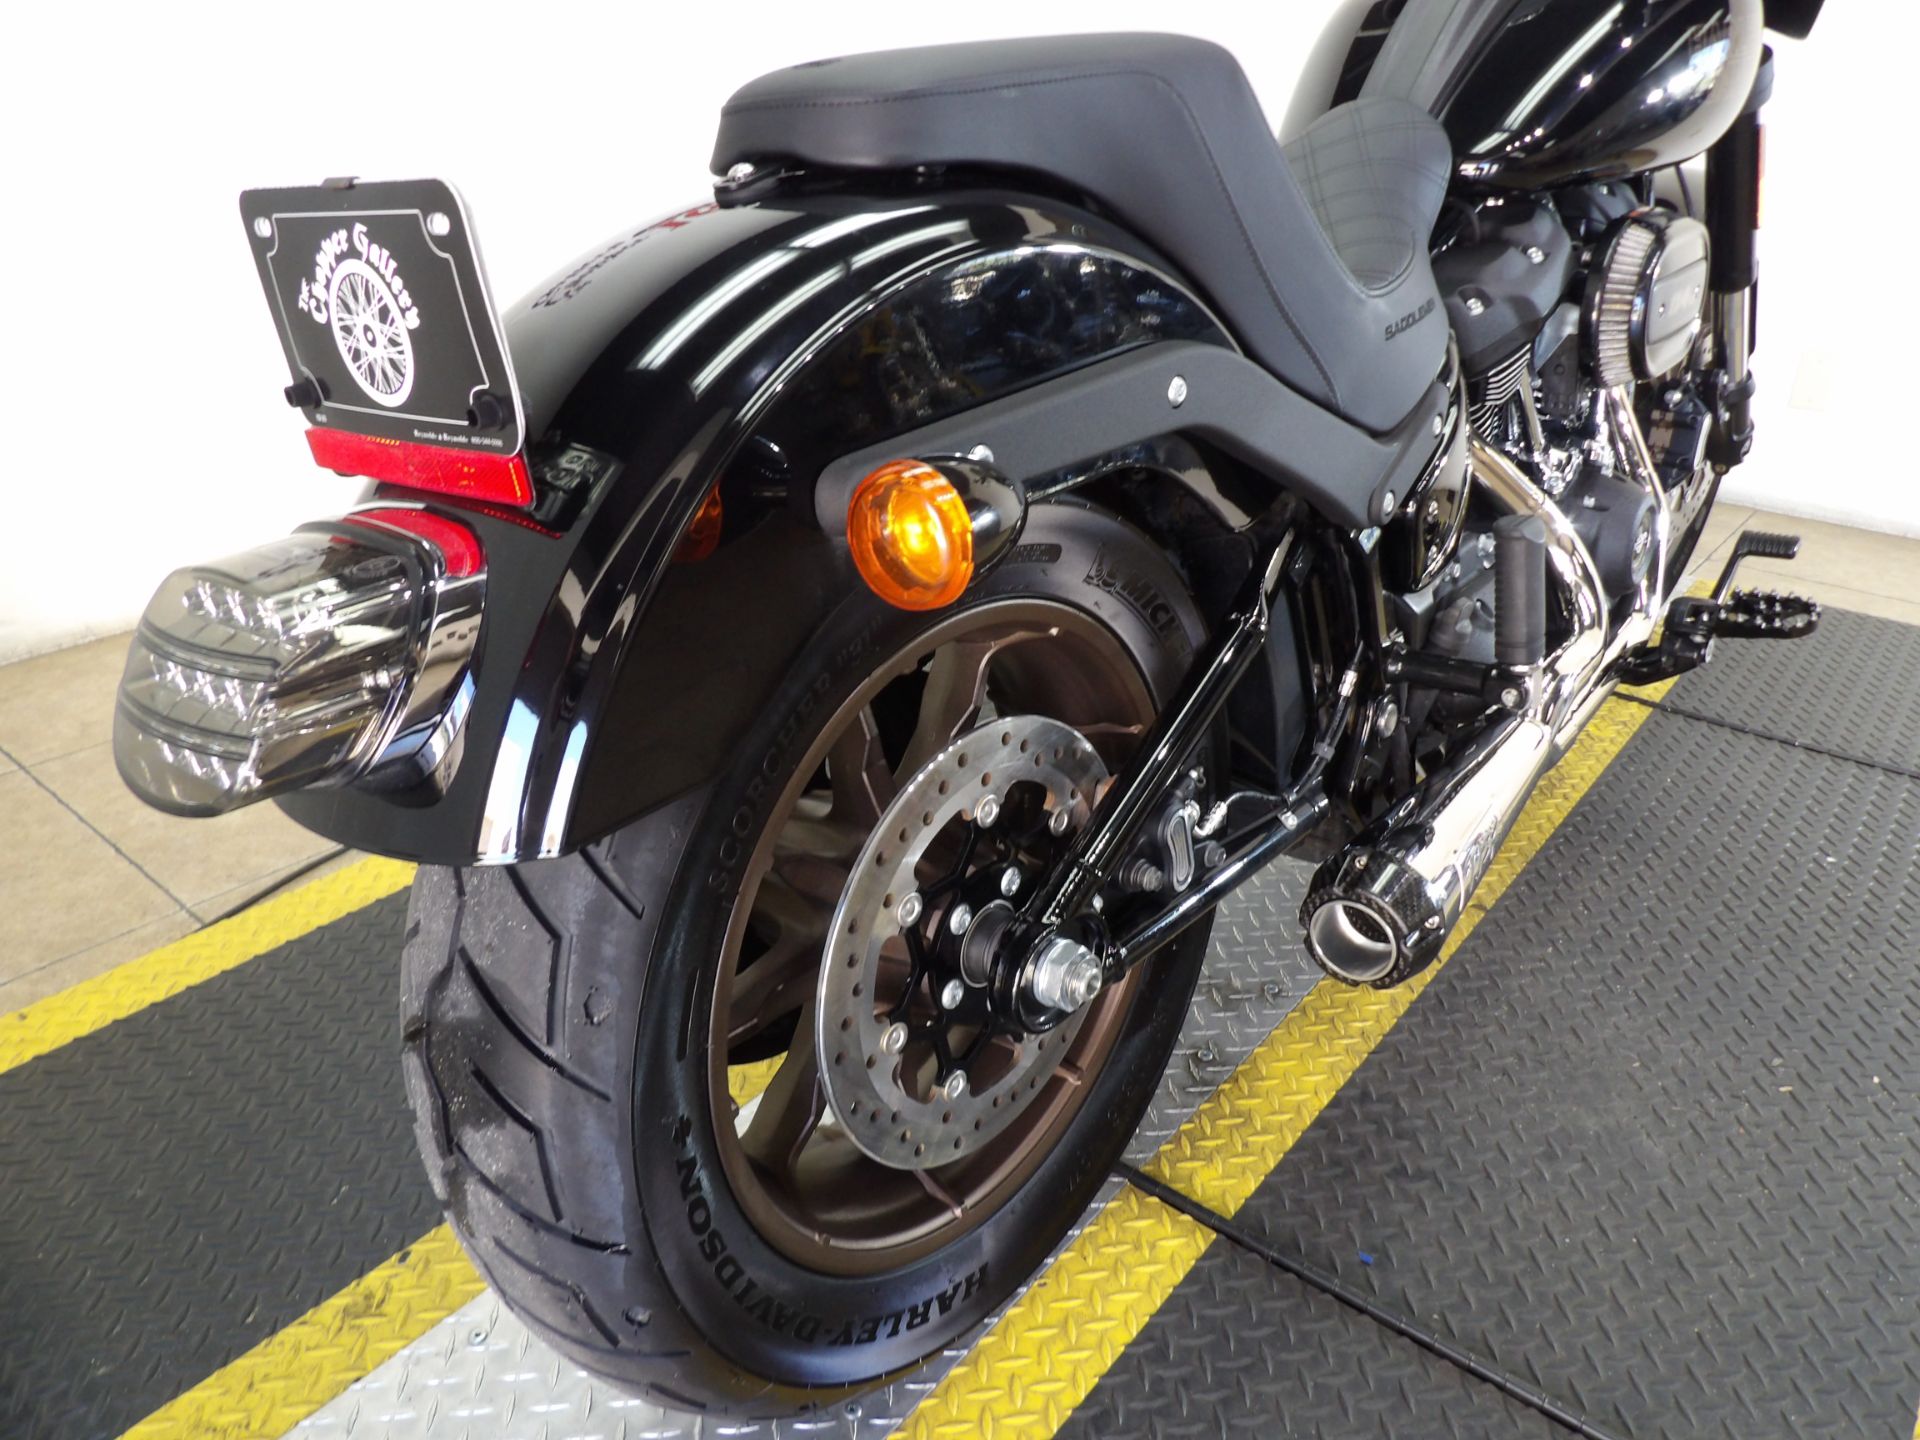 2021 Harley-Davidson Low Rider®S in Temecula, California - Photo 31